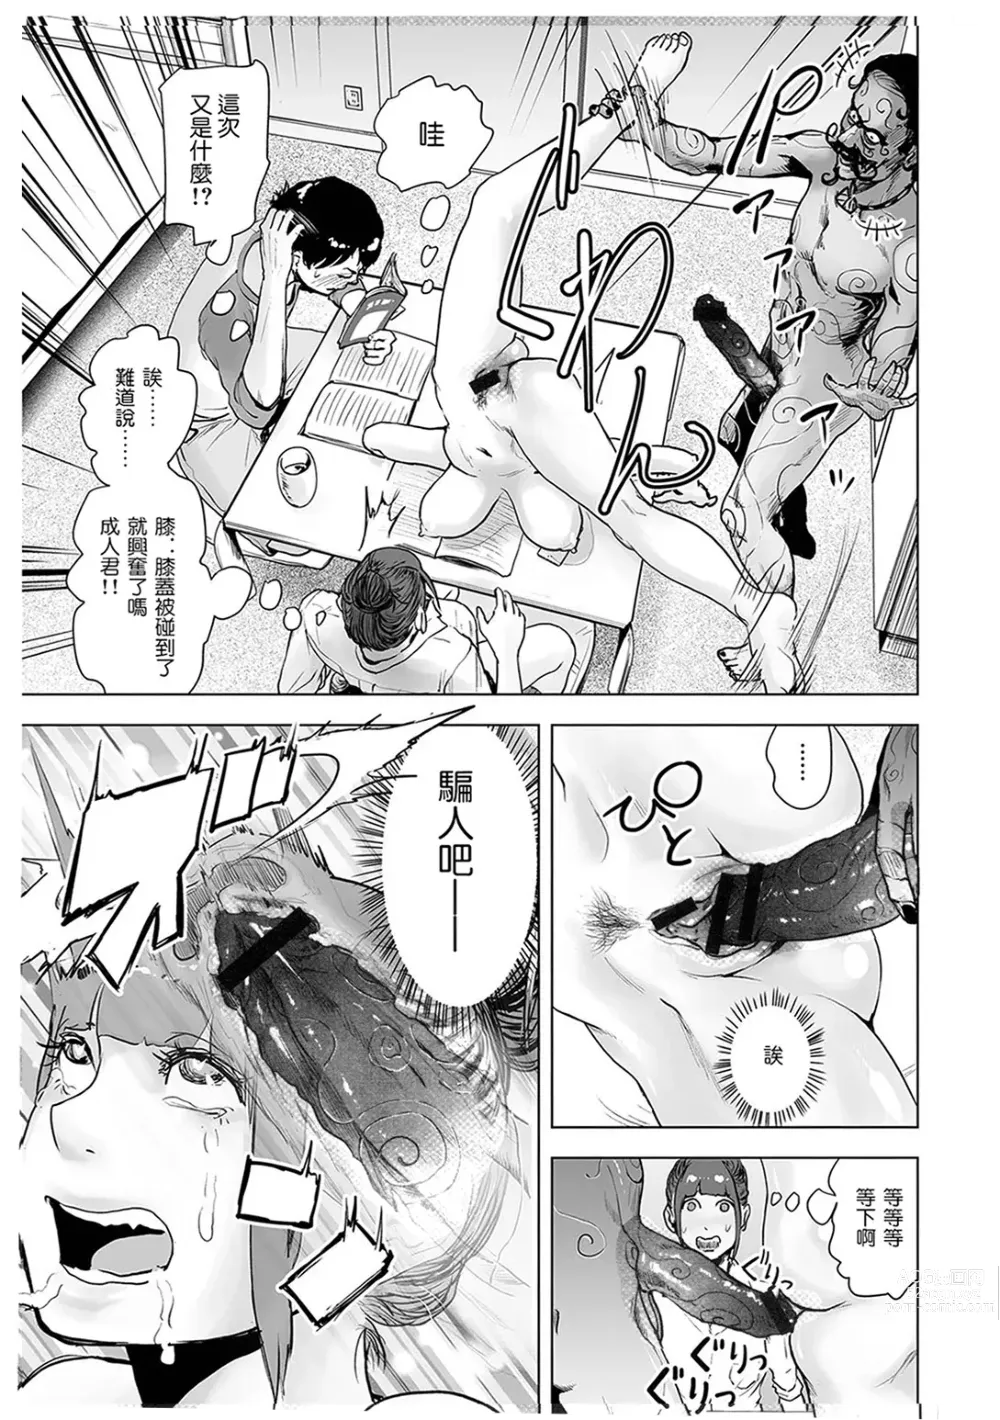 Page 16 of manga #Futsuu no Onnanoko